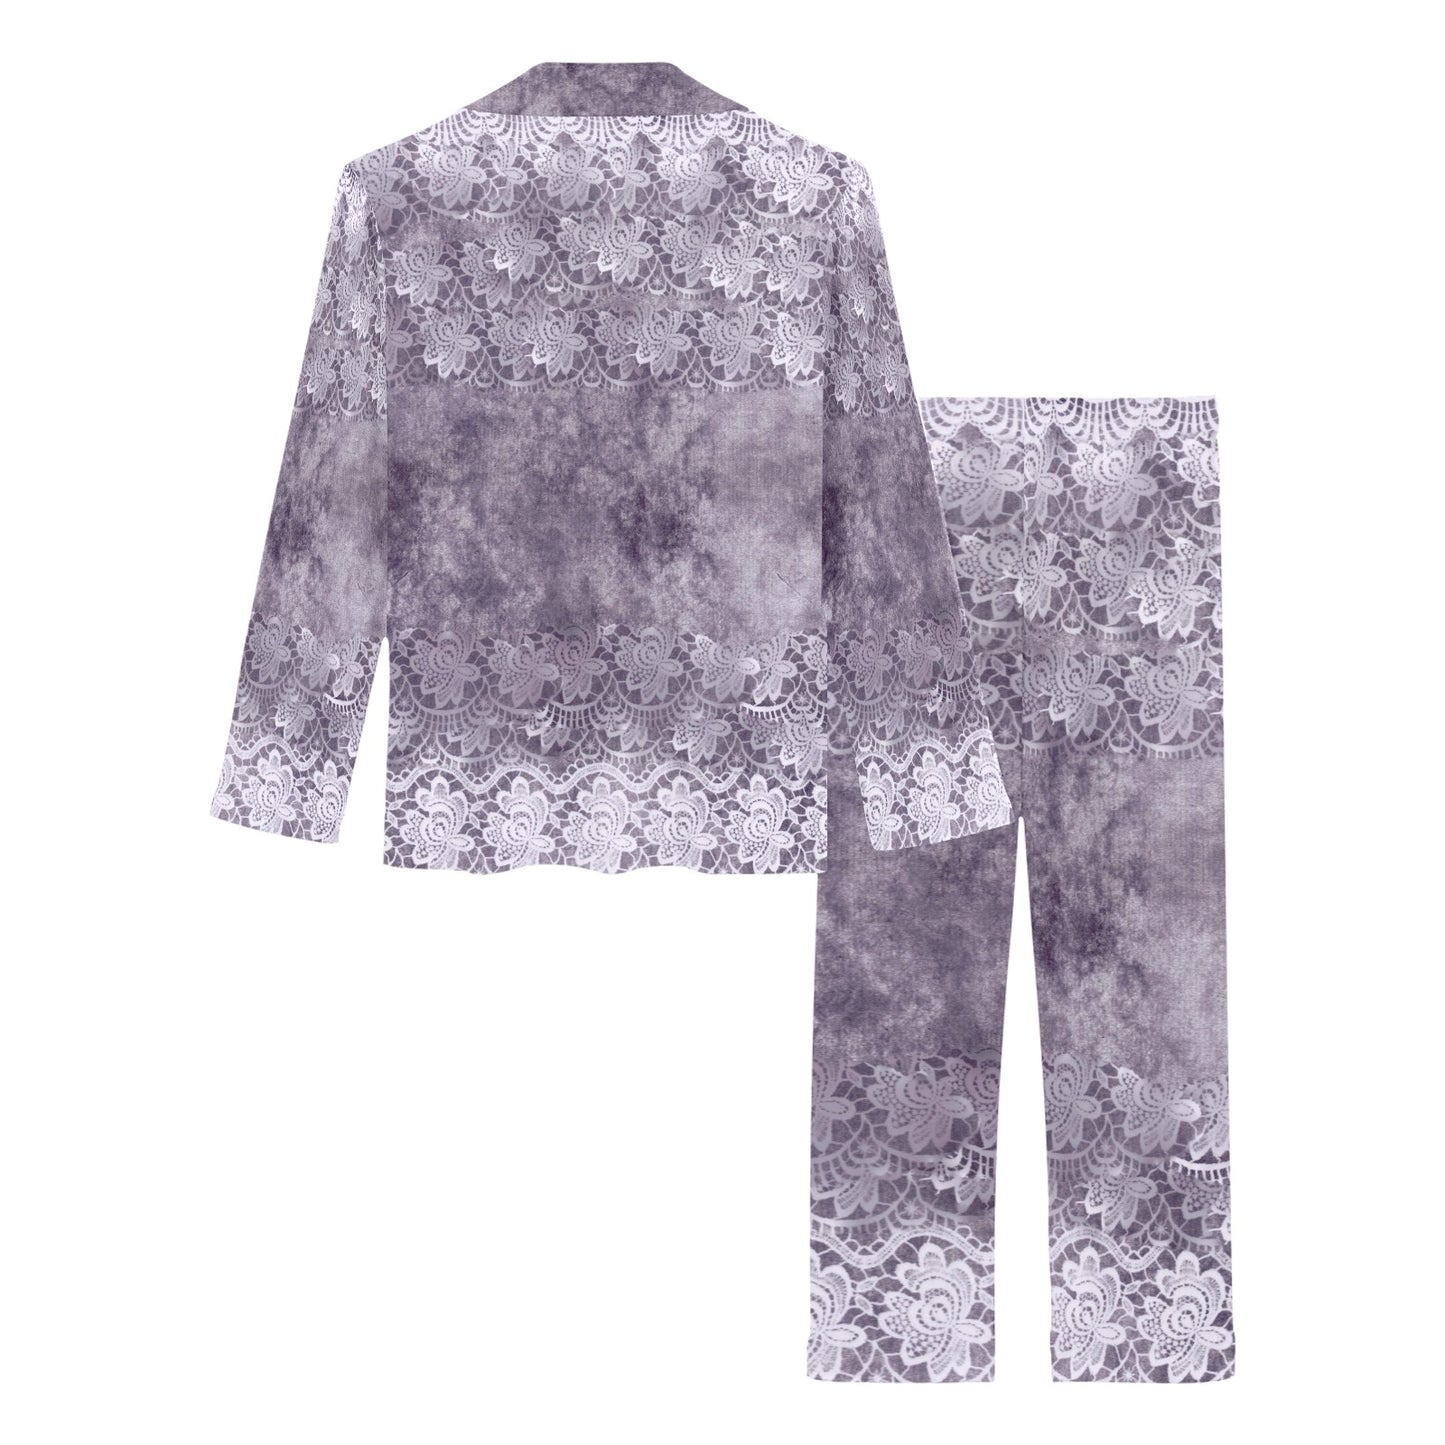 Victorian printed lace pajama set, design 39 Women's Long Pajama Set (Sets 02)